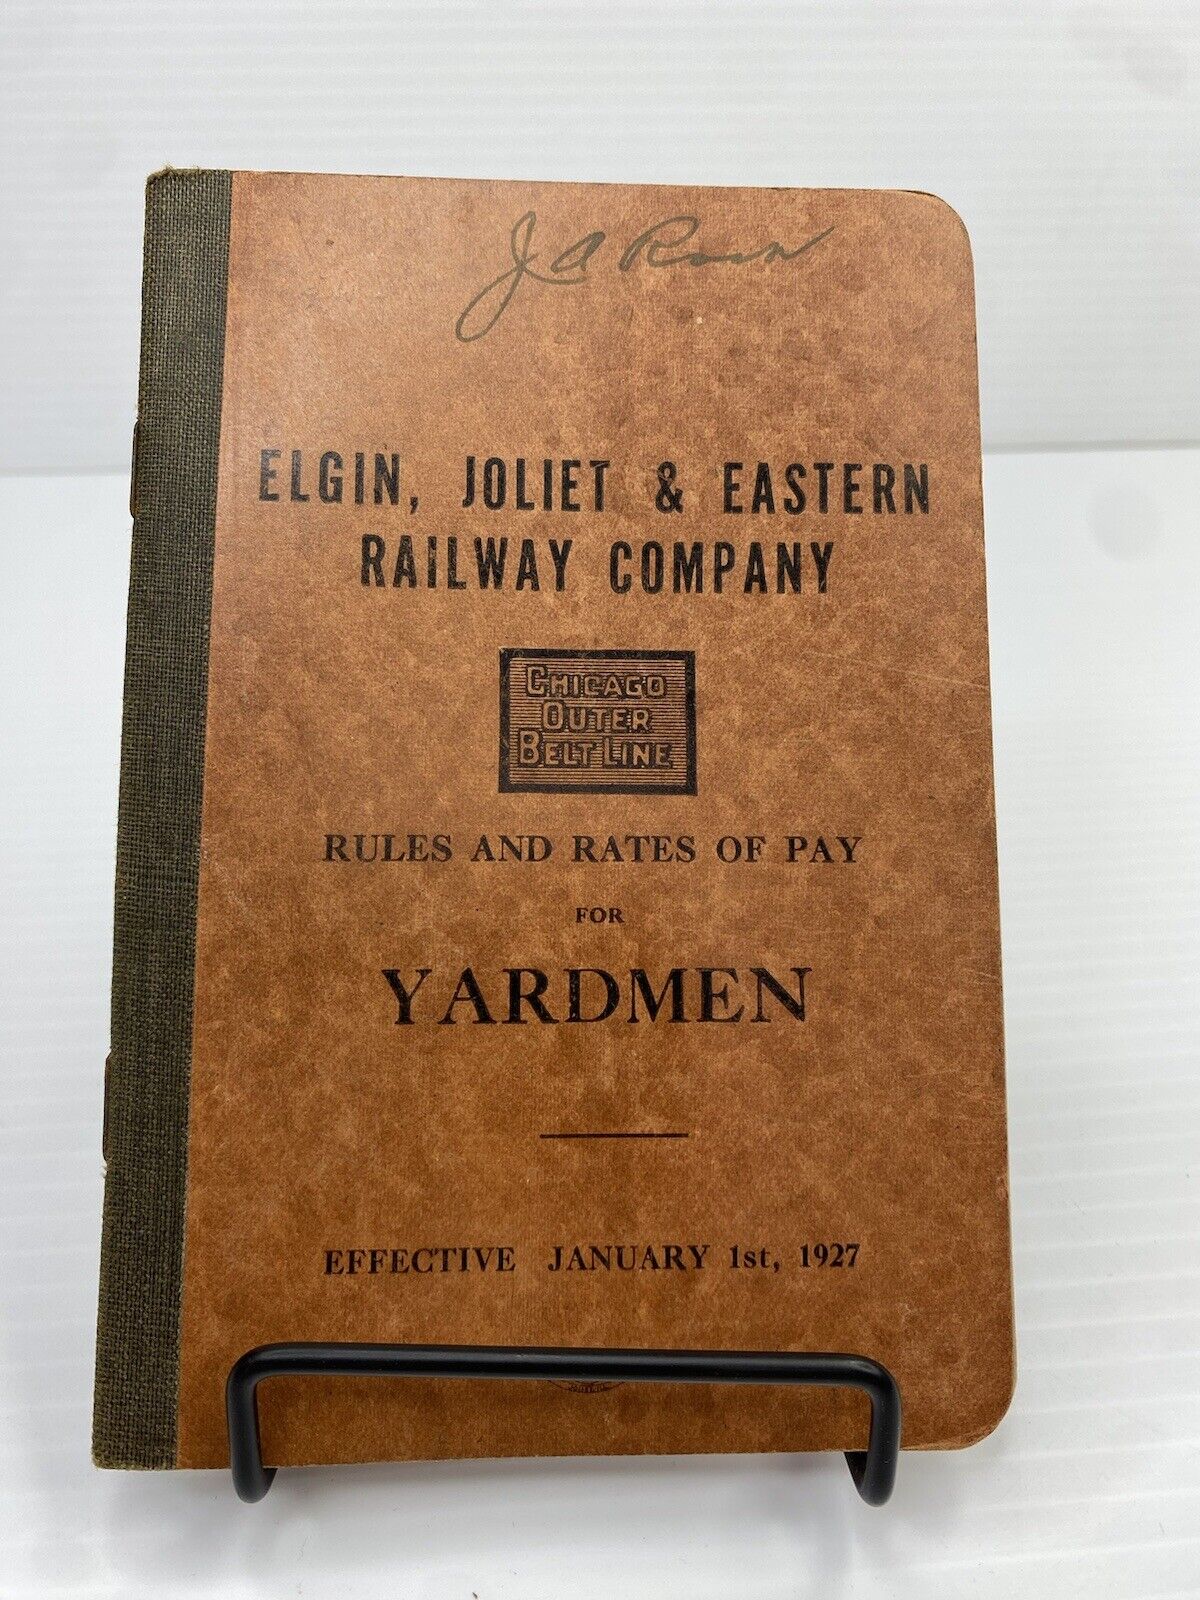 1943 Elgin Joliet Eastern Railway Company Chicago Outer Belt Line Rules Yardmen